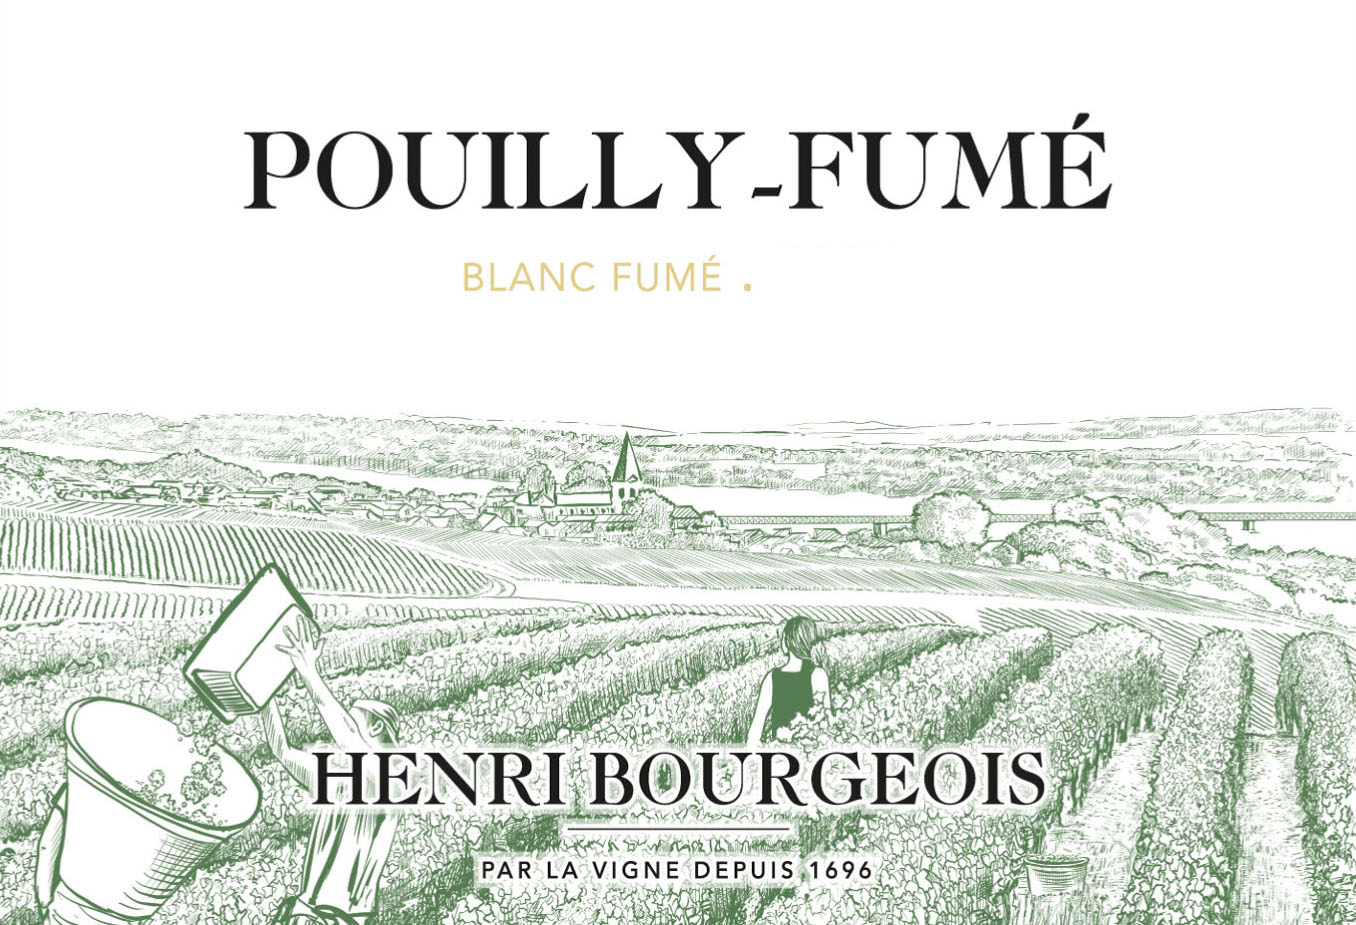 Henri Bourgeois - Pouilly-Fume label